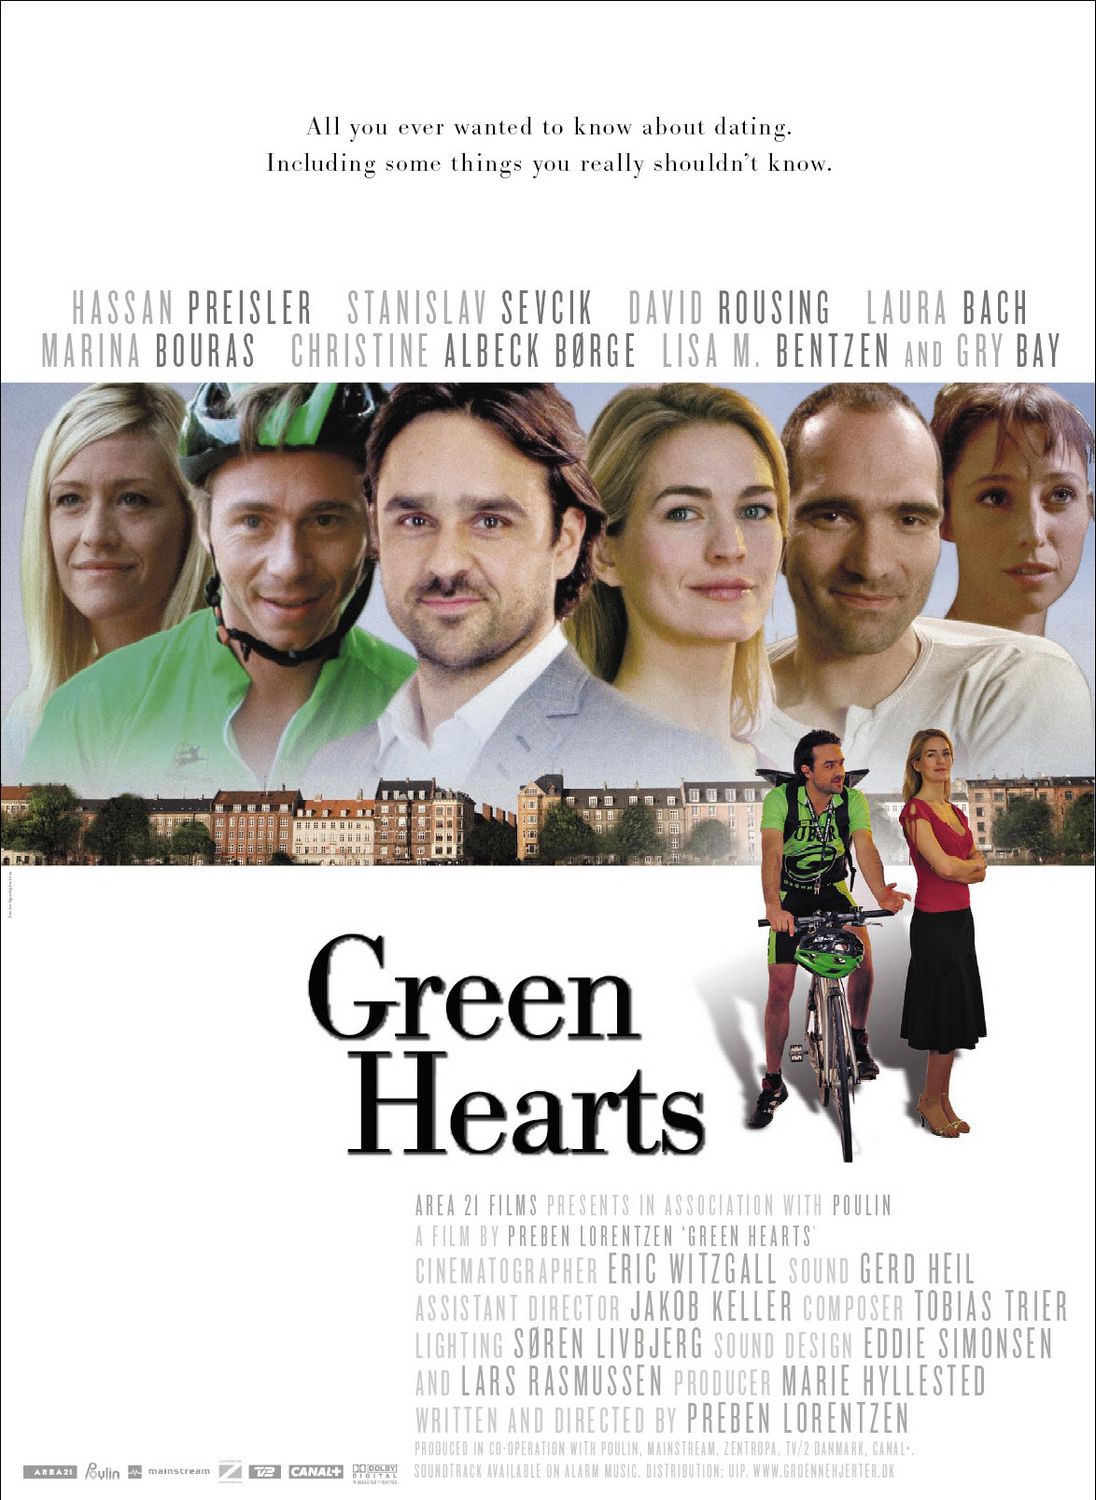 Extra Large Movie Poster Image for Grønne hjerter (aka Green Hearts) 